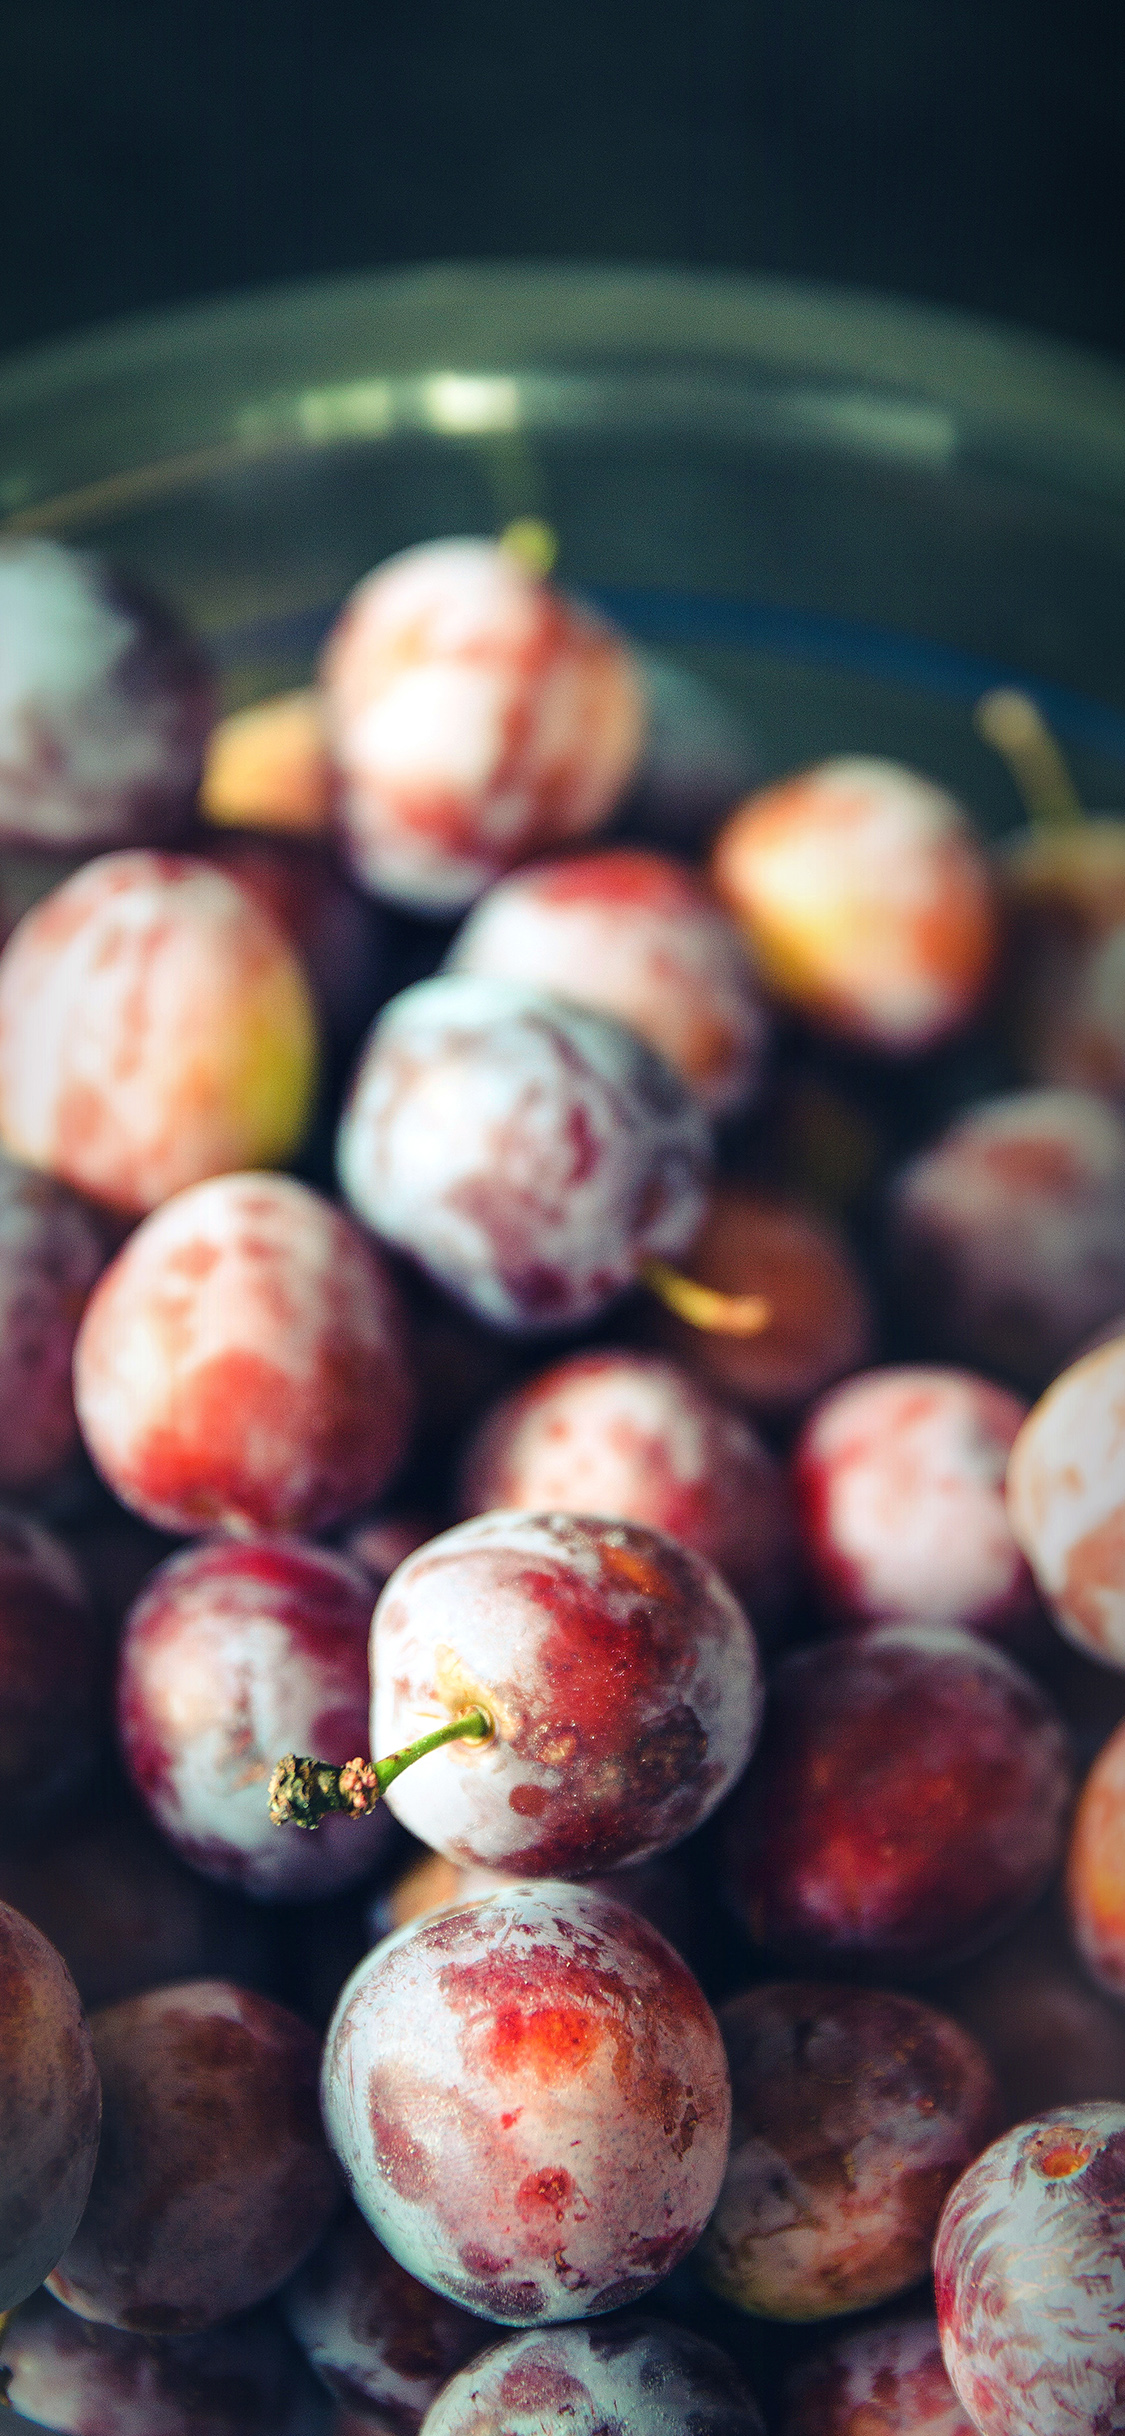 iPhone X wallpaper. berry grape food flower nature dark